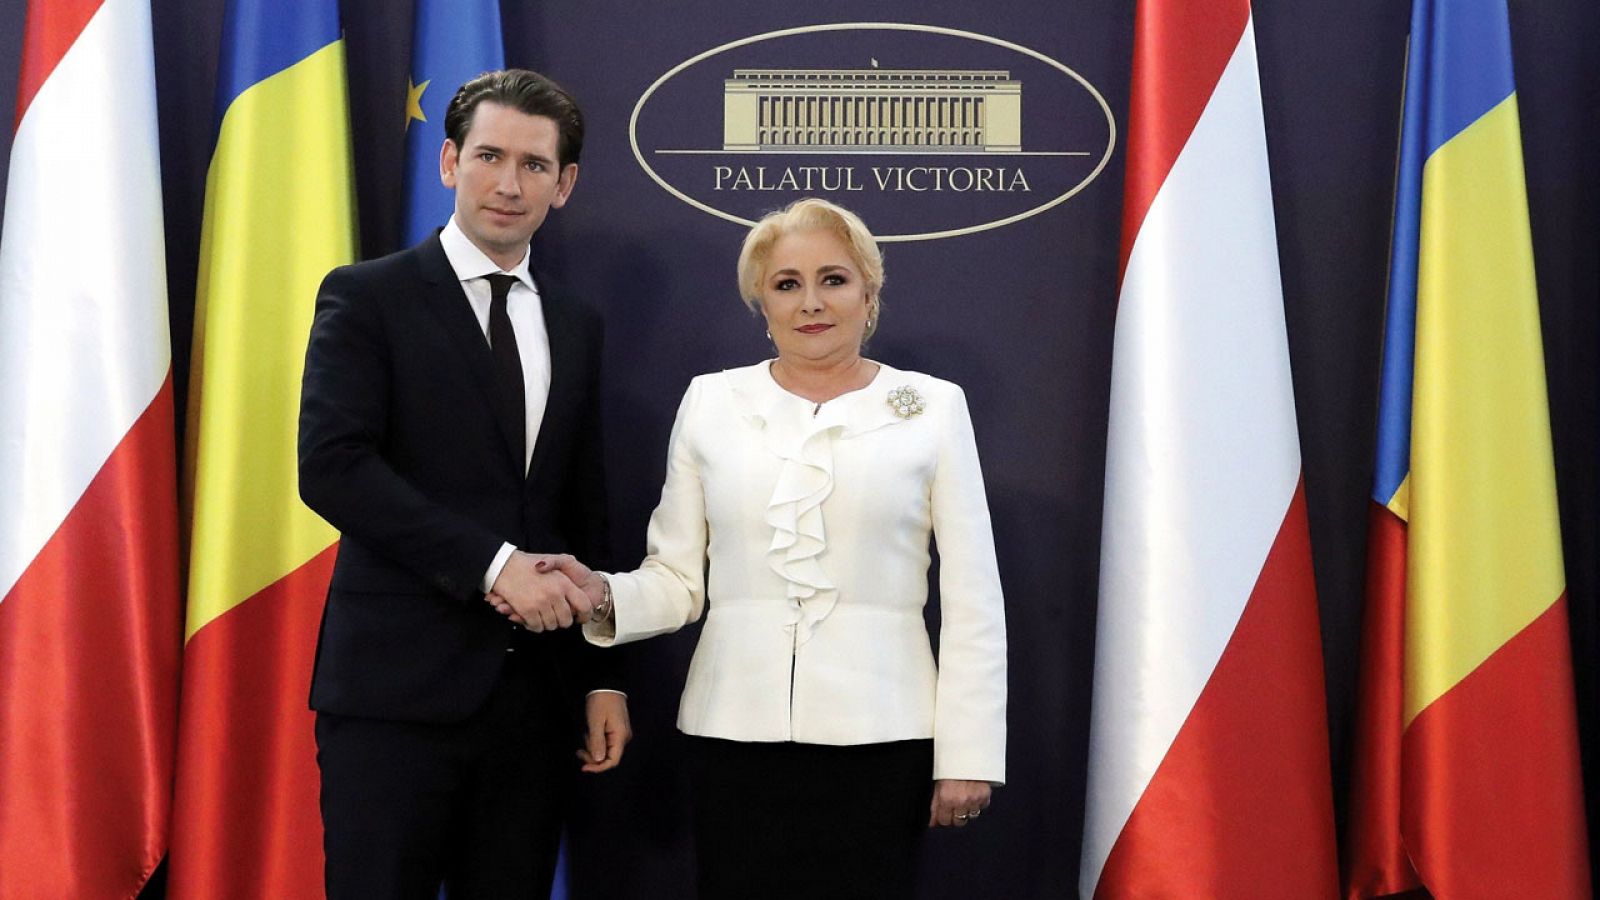 El canciller austríaco, Sebastian Kurz, entrega el testigo de la Presidencia de la UE a la primera ministra rumana, Viorica Dancila